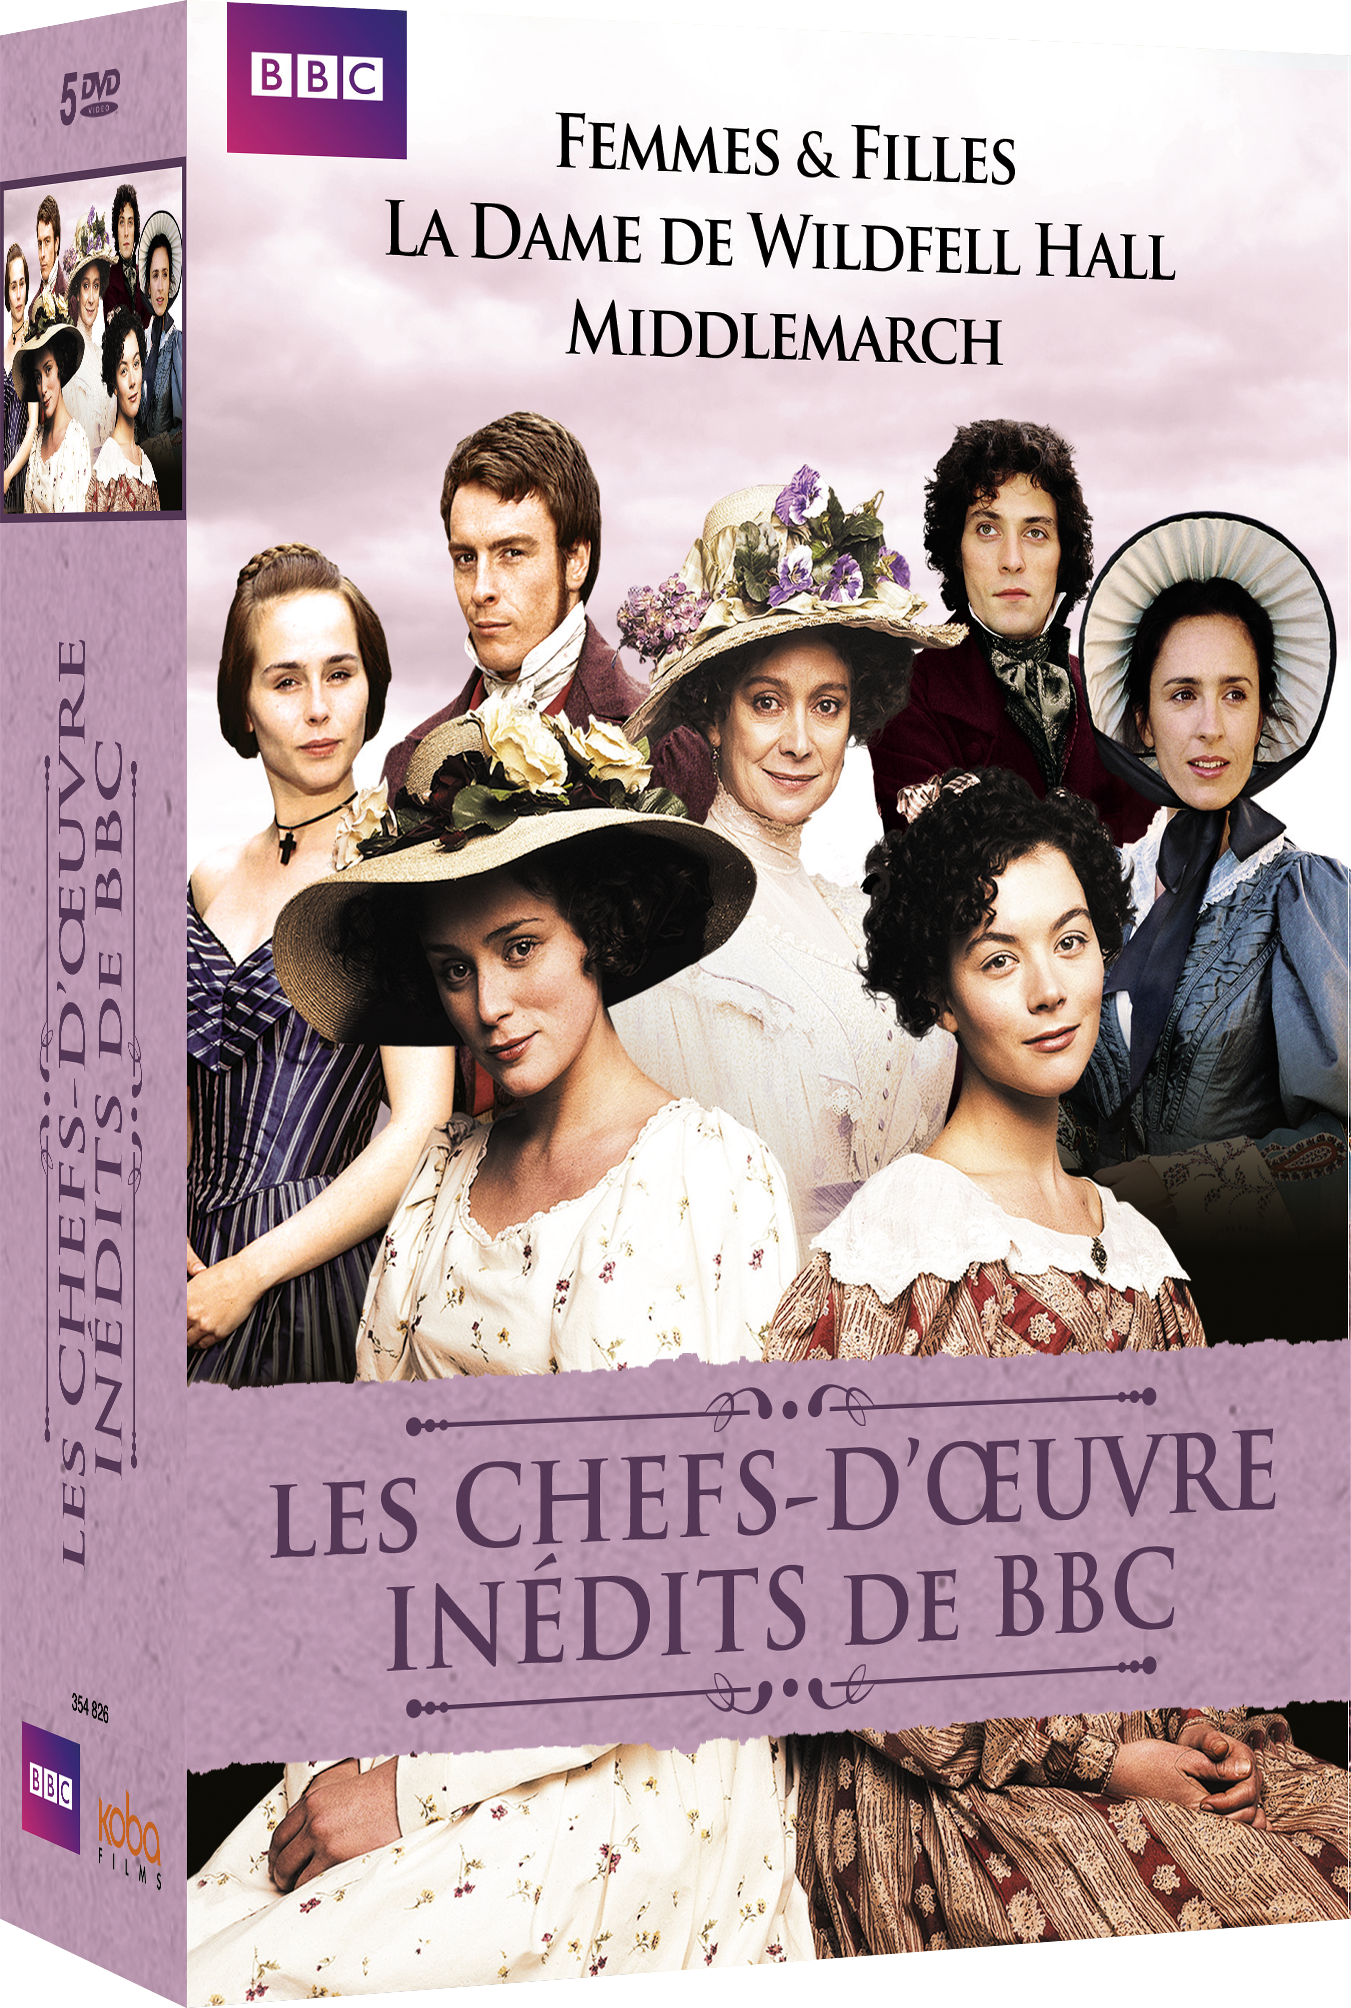 CHEFS-D'ŒUVRE INEDITS BBC (LES) (VOST) - (5 DVD)